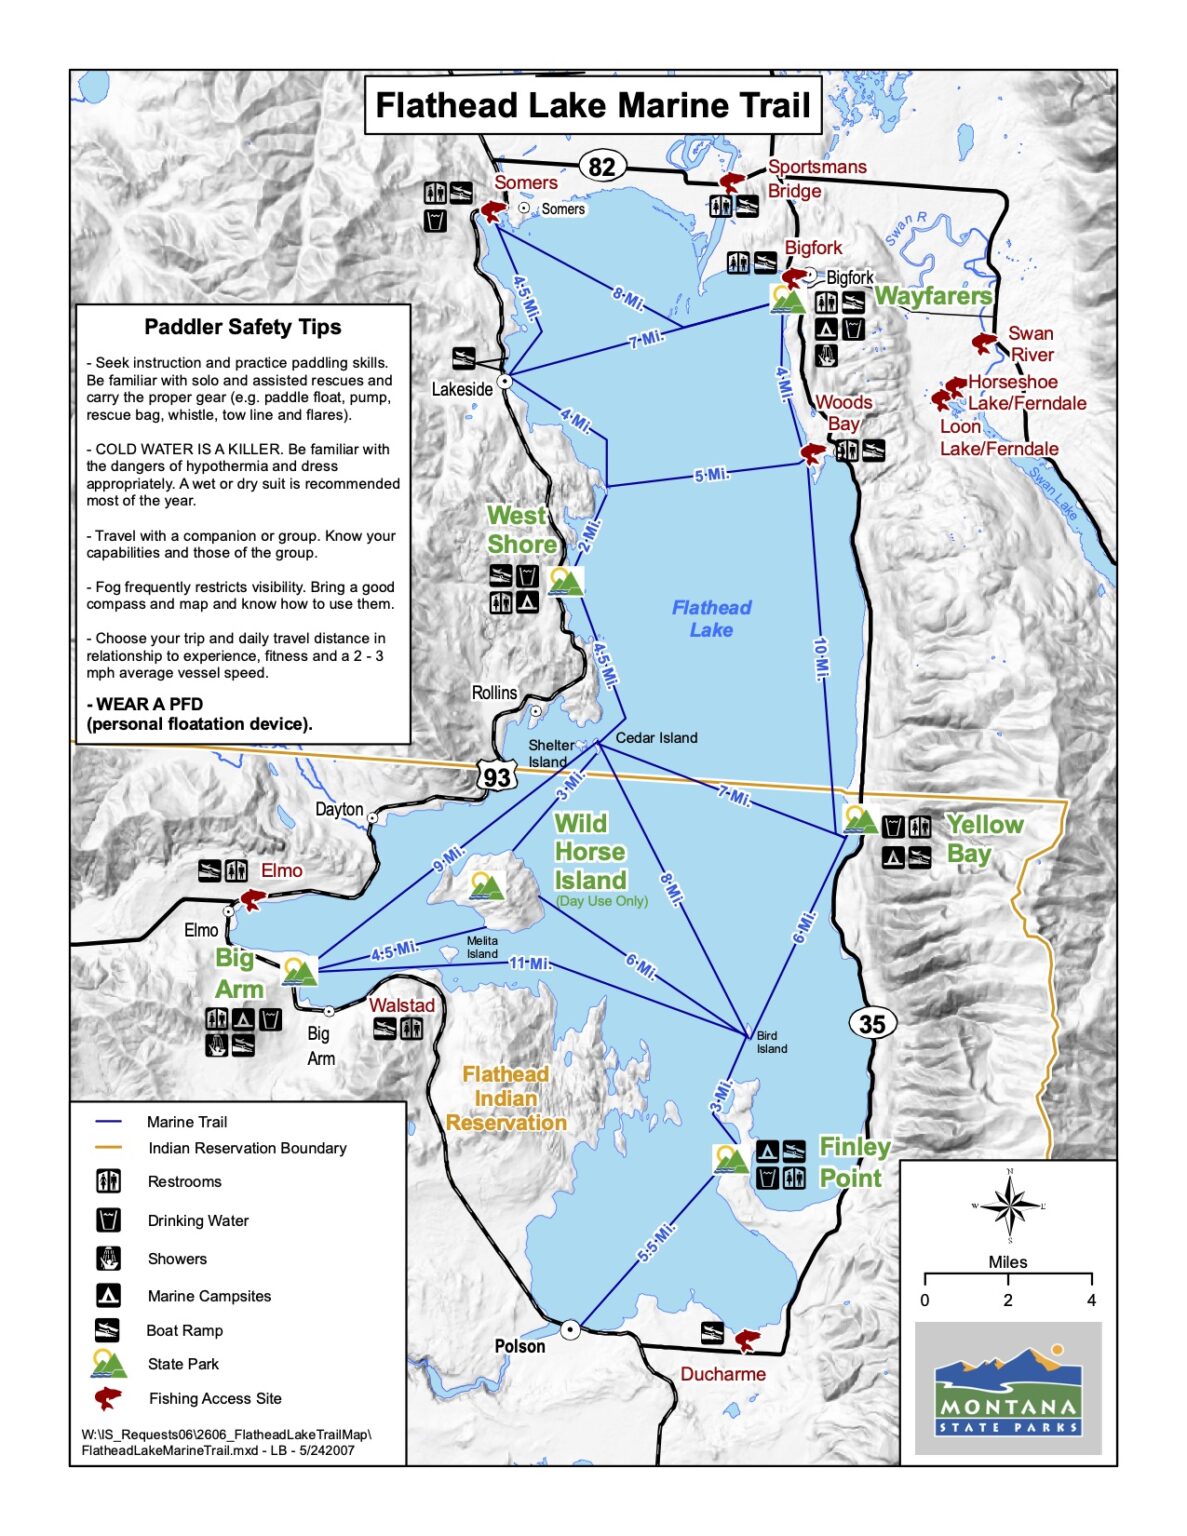 Flathead Lake Marine Trail Map 1187x1536 